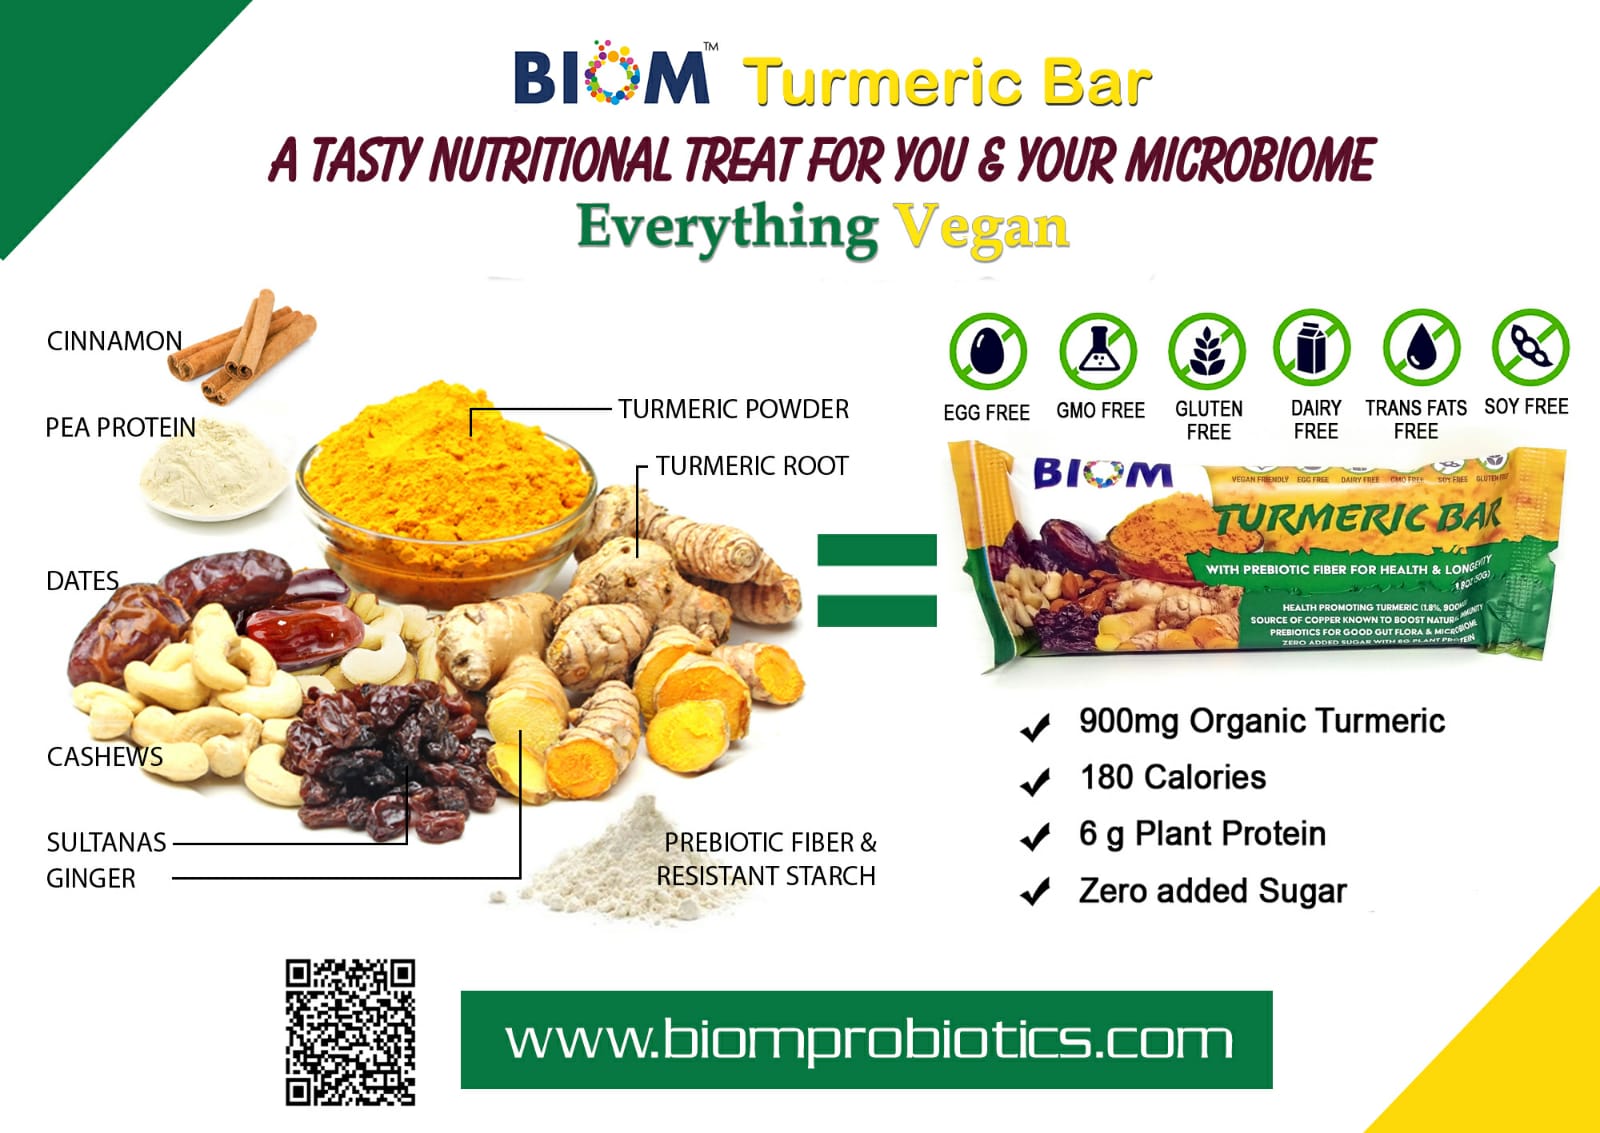 The Biom Turmeric Bar With Prebiotics